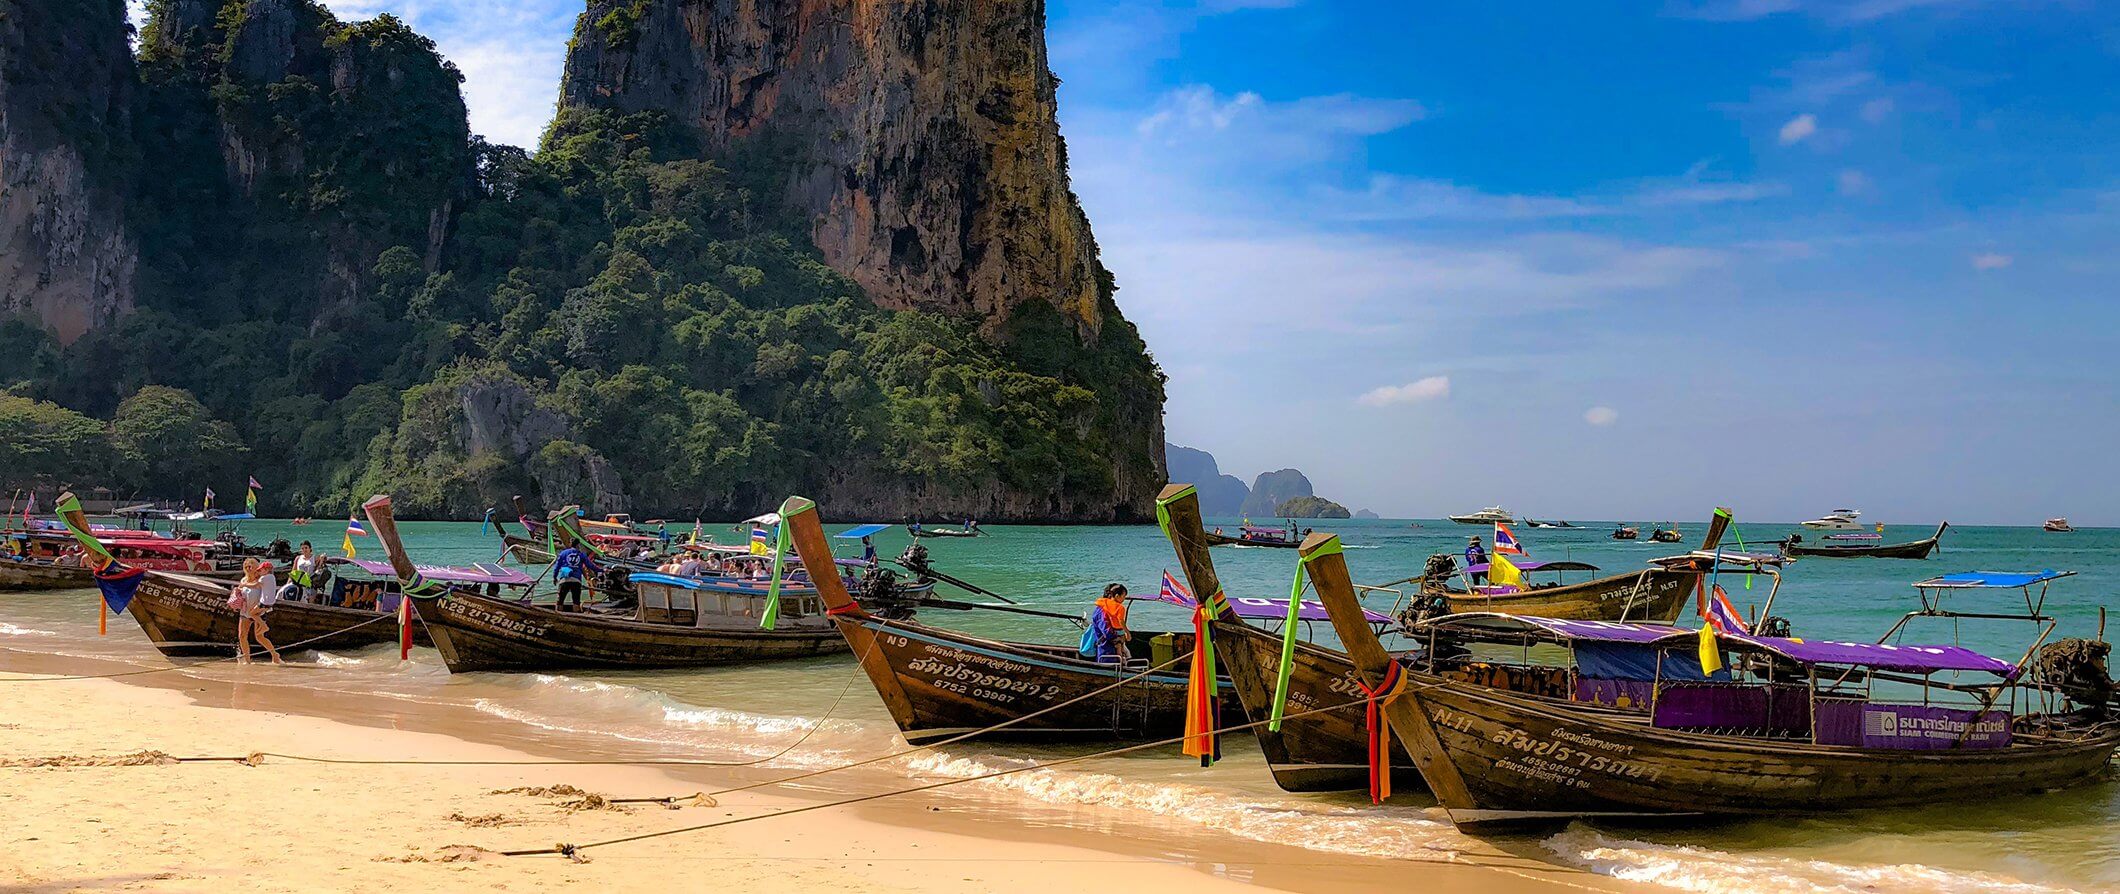 Thailand Travel Guide | Tips For Your Trip | Nomadic Matt